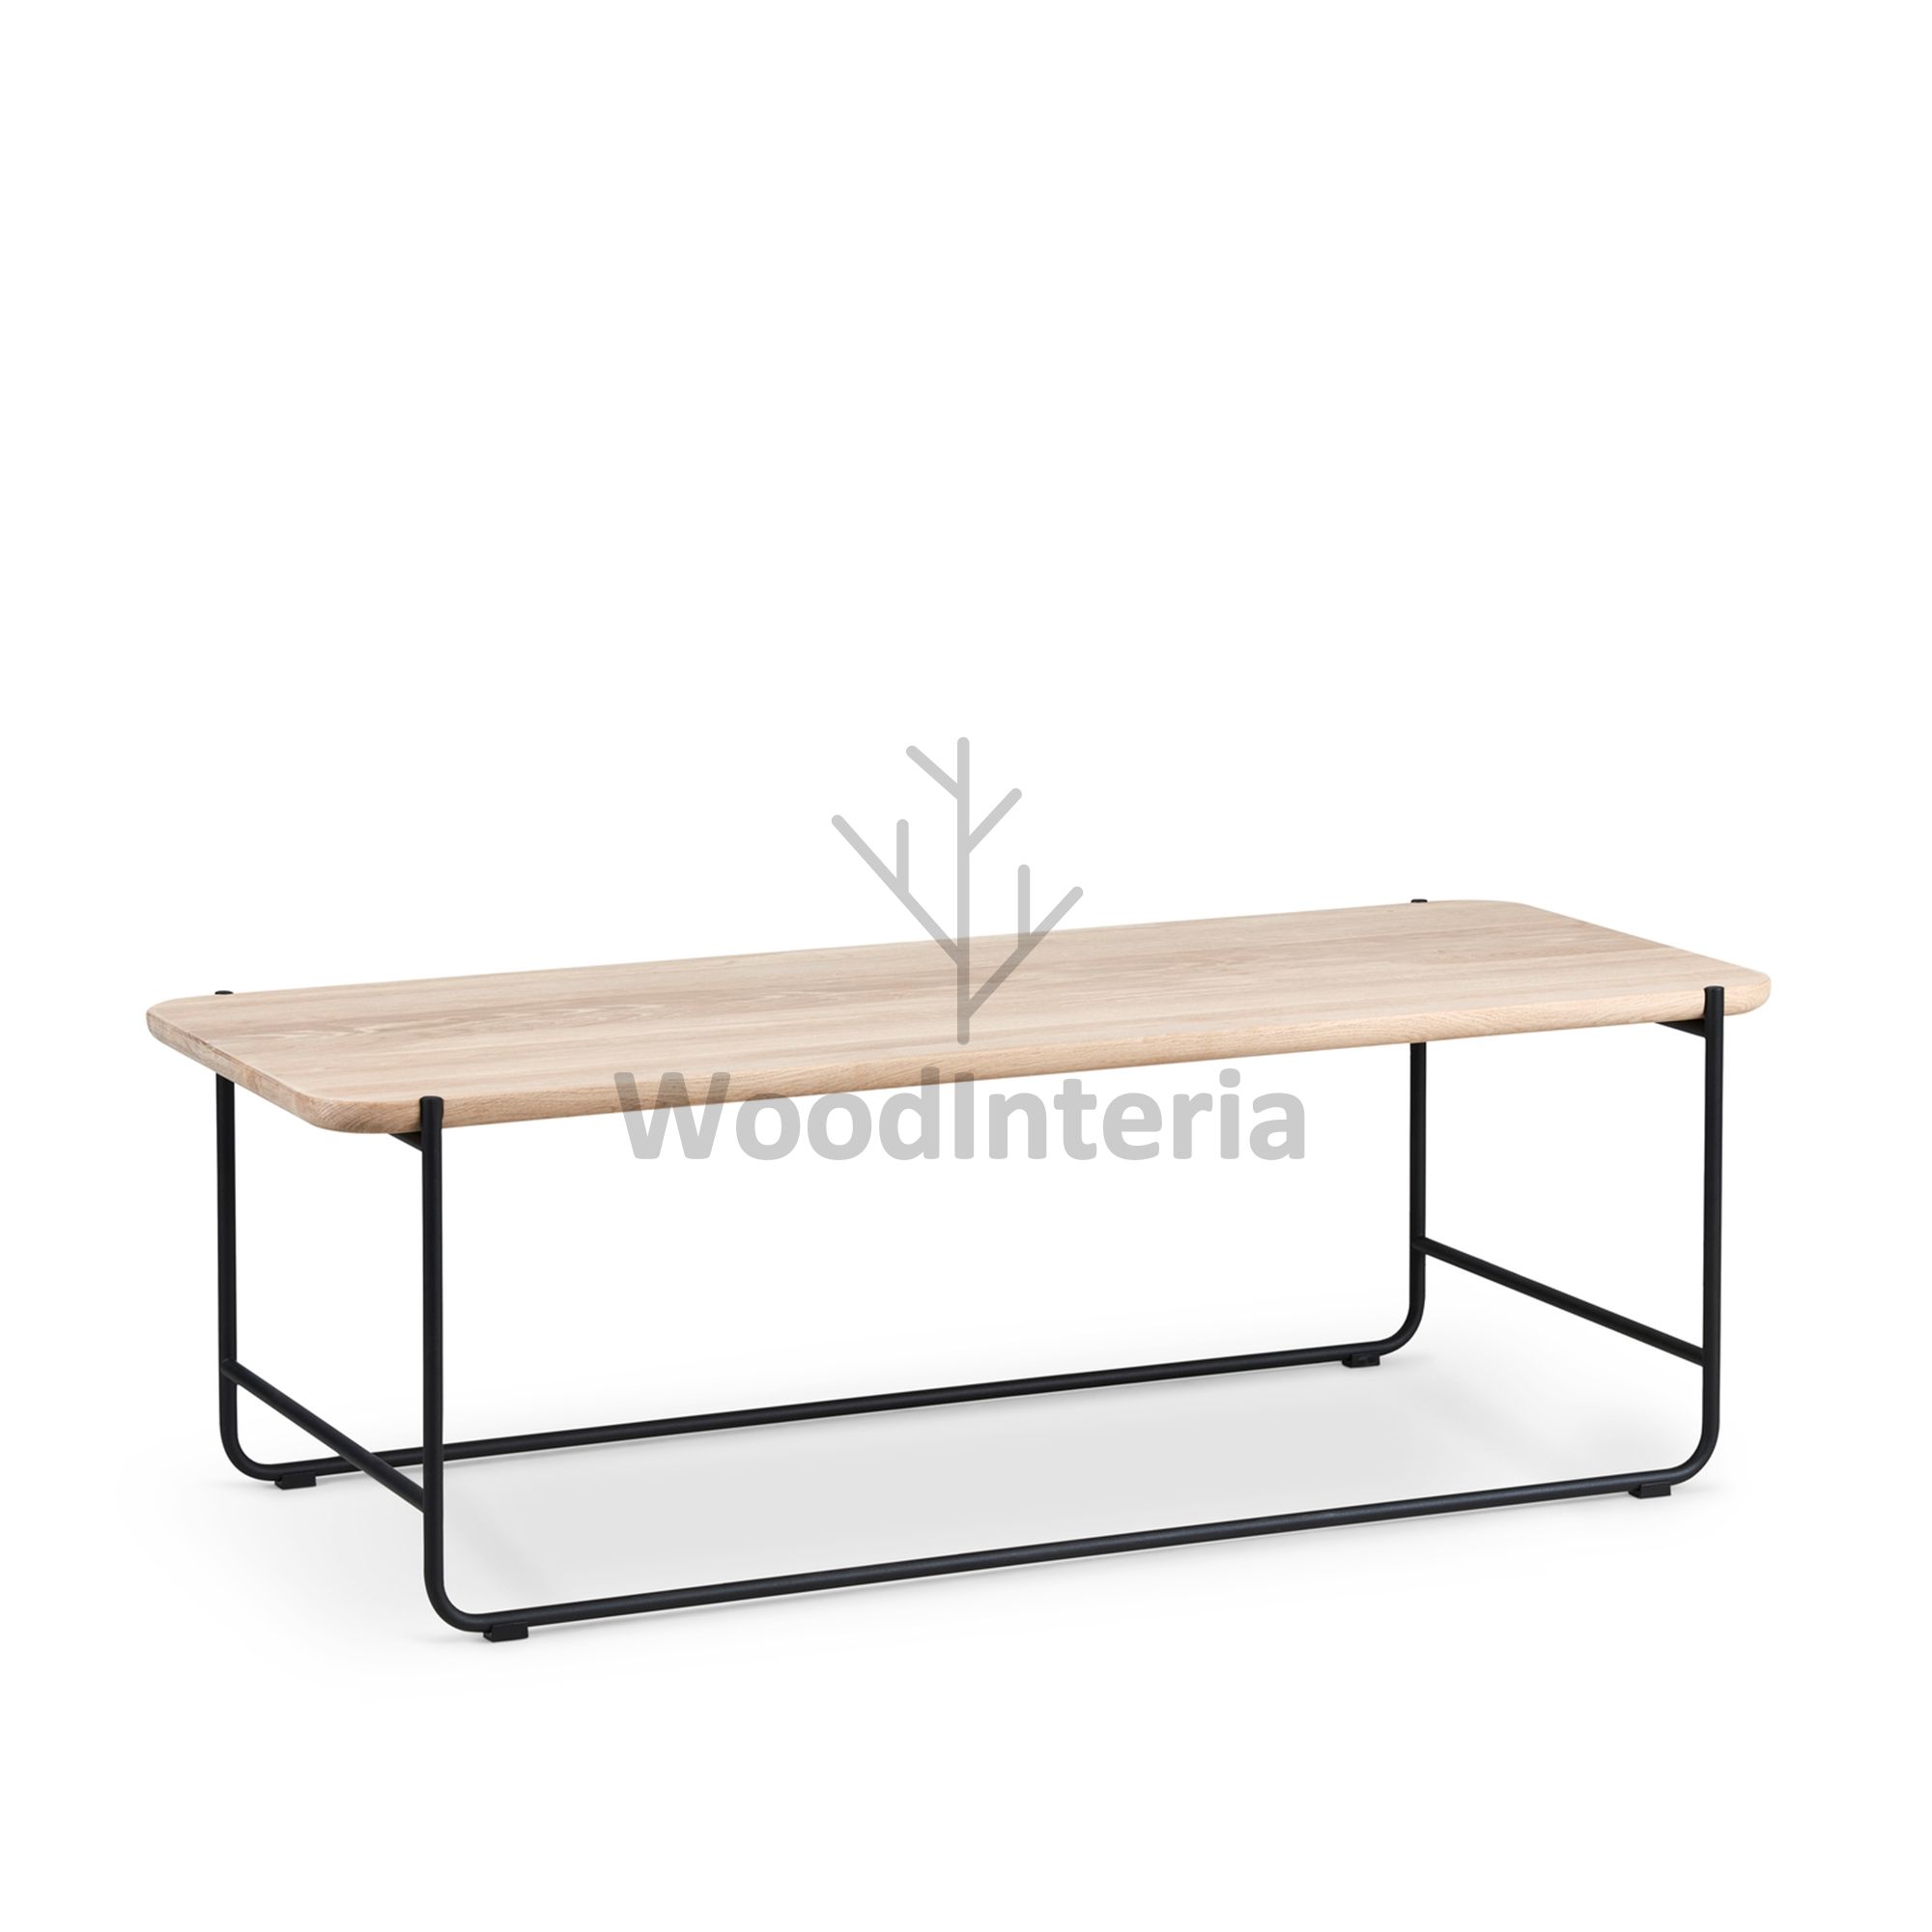 фото кофейный стол chamfer rod square 140 в интерьере лофт эко | WoodInteria